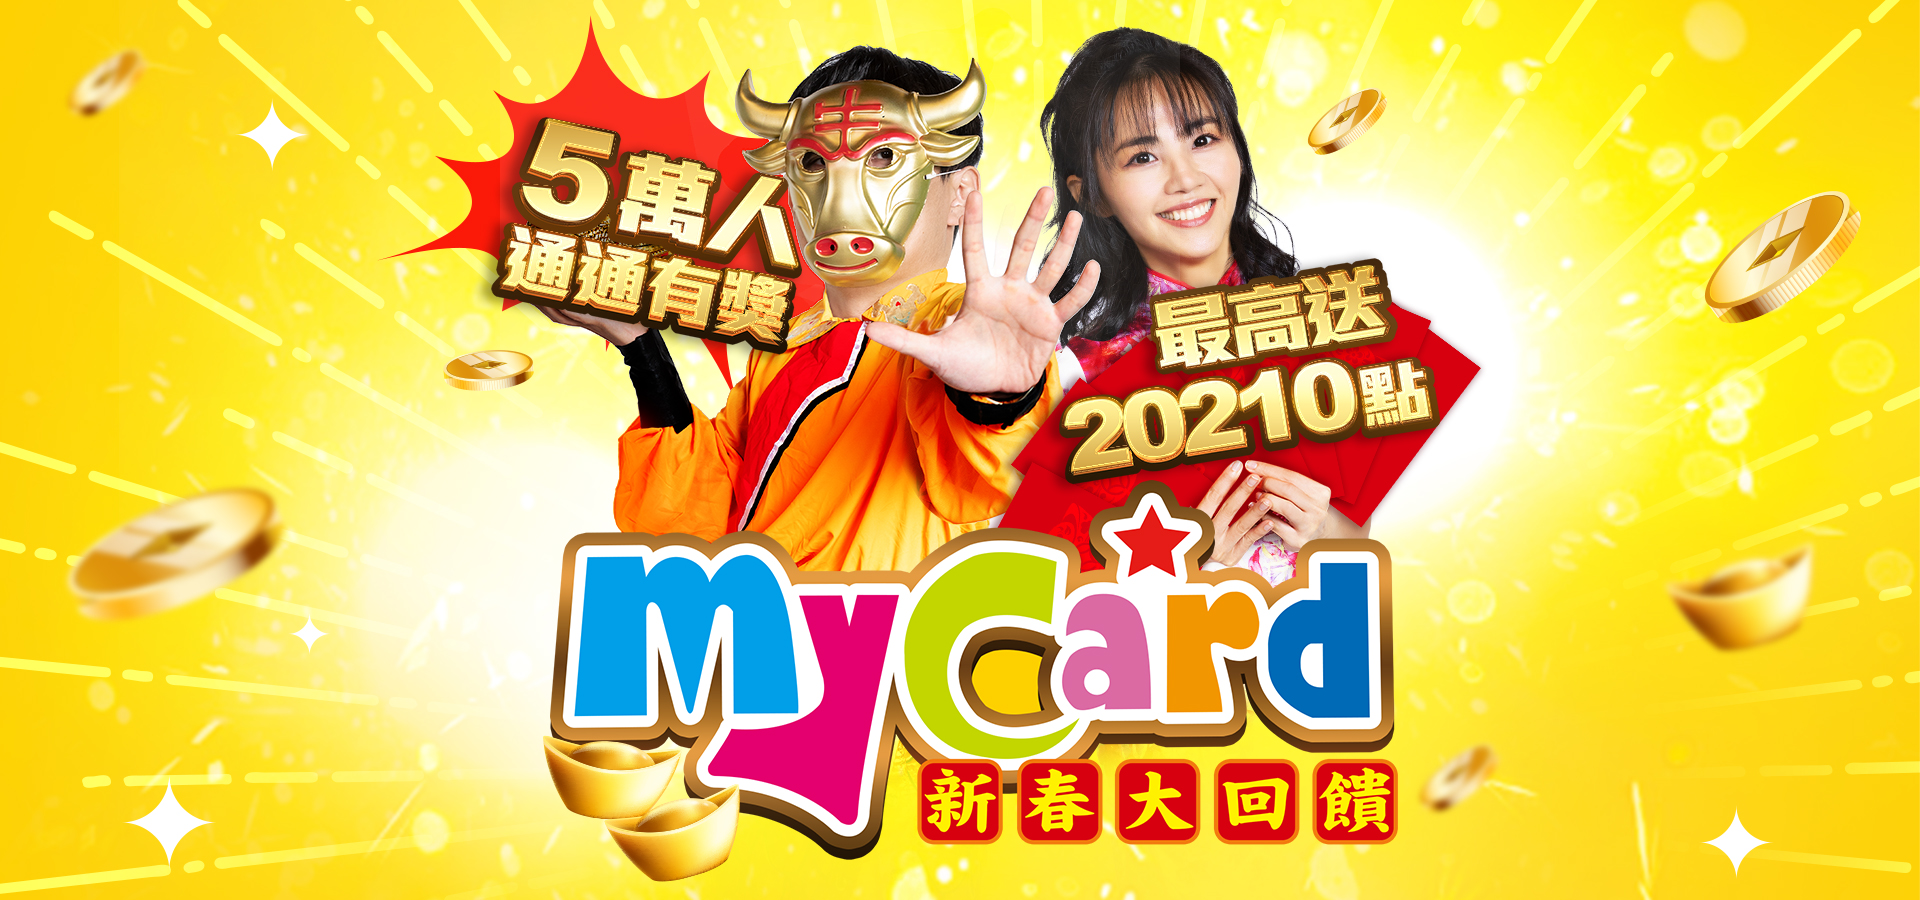   MyCard新春大回饋